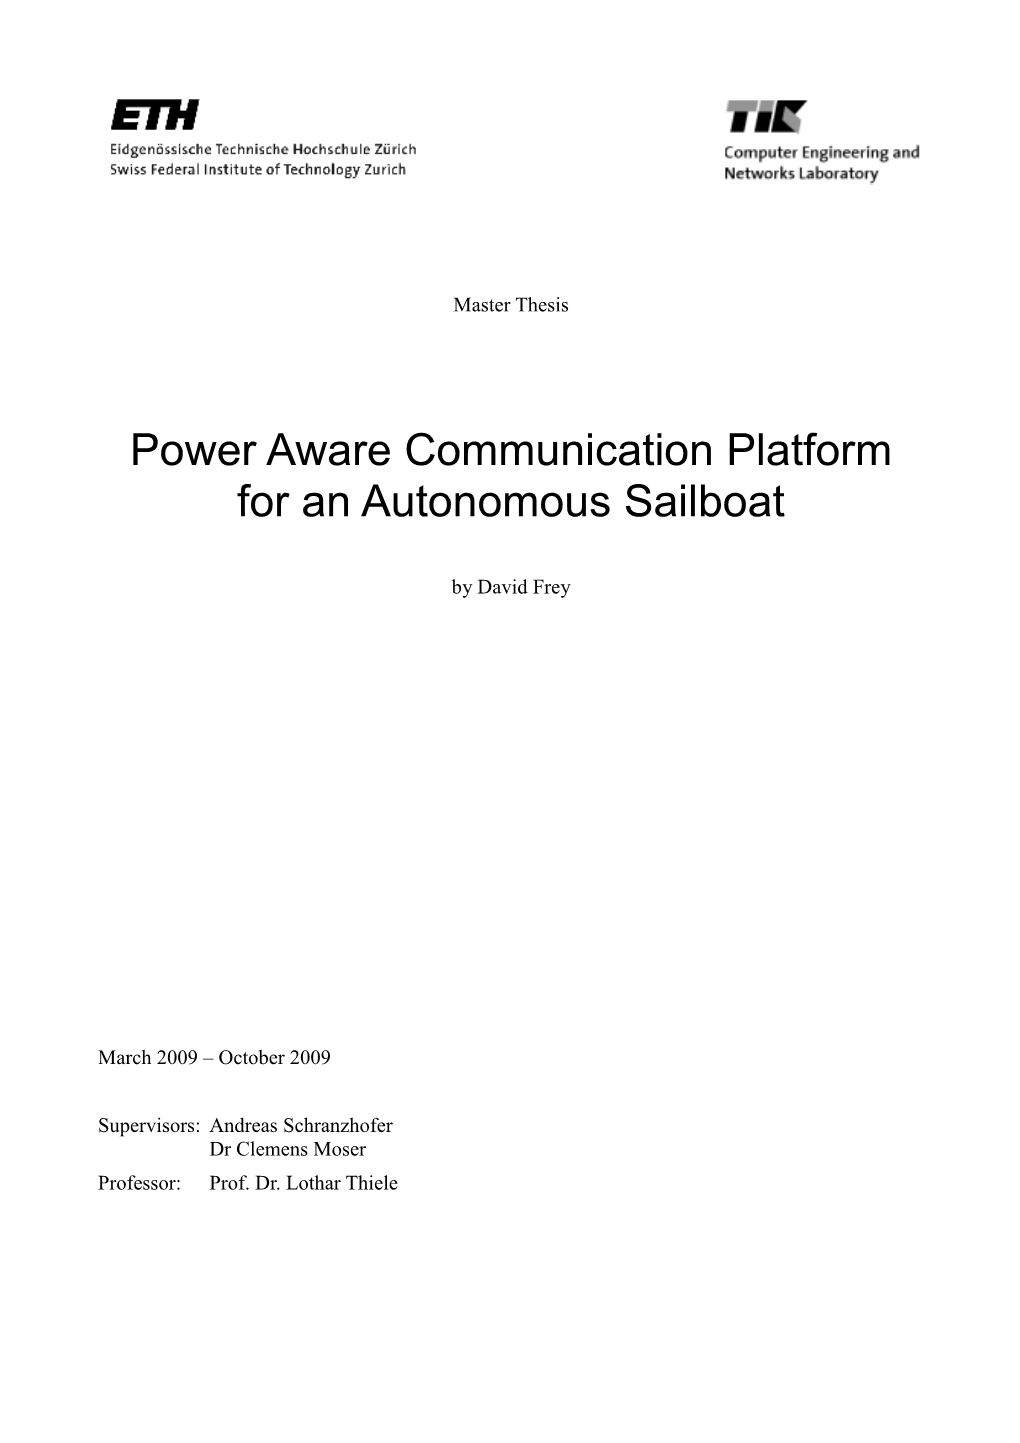 Power Aware Communication Platform for an Autonomous Sailboat